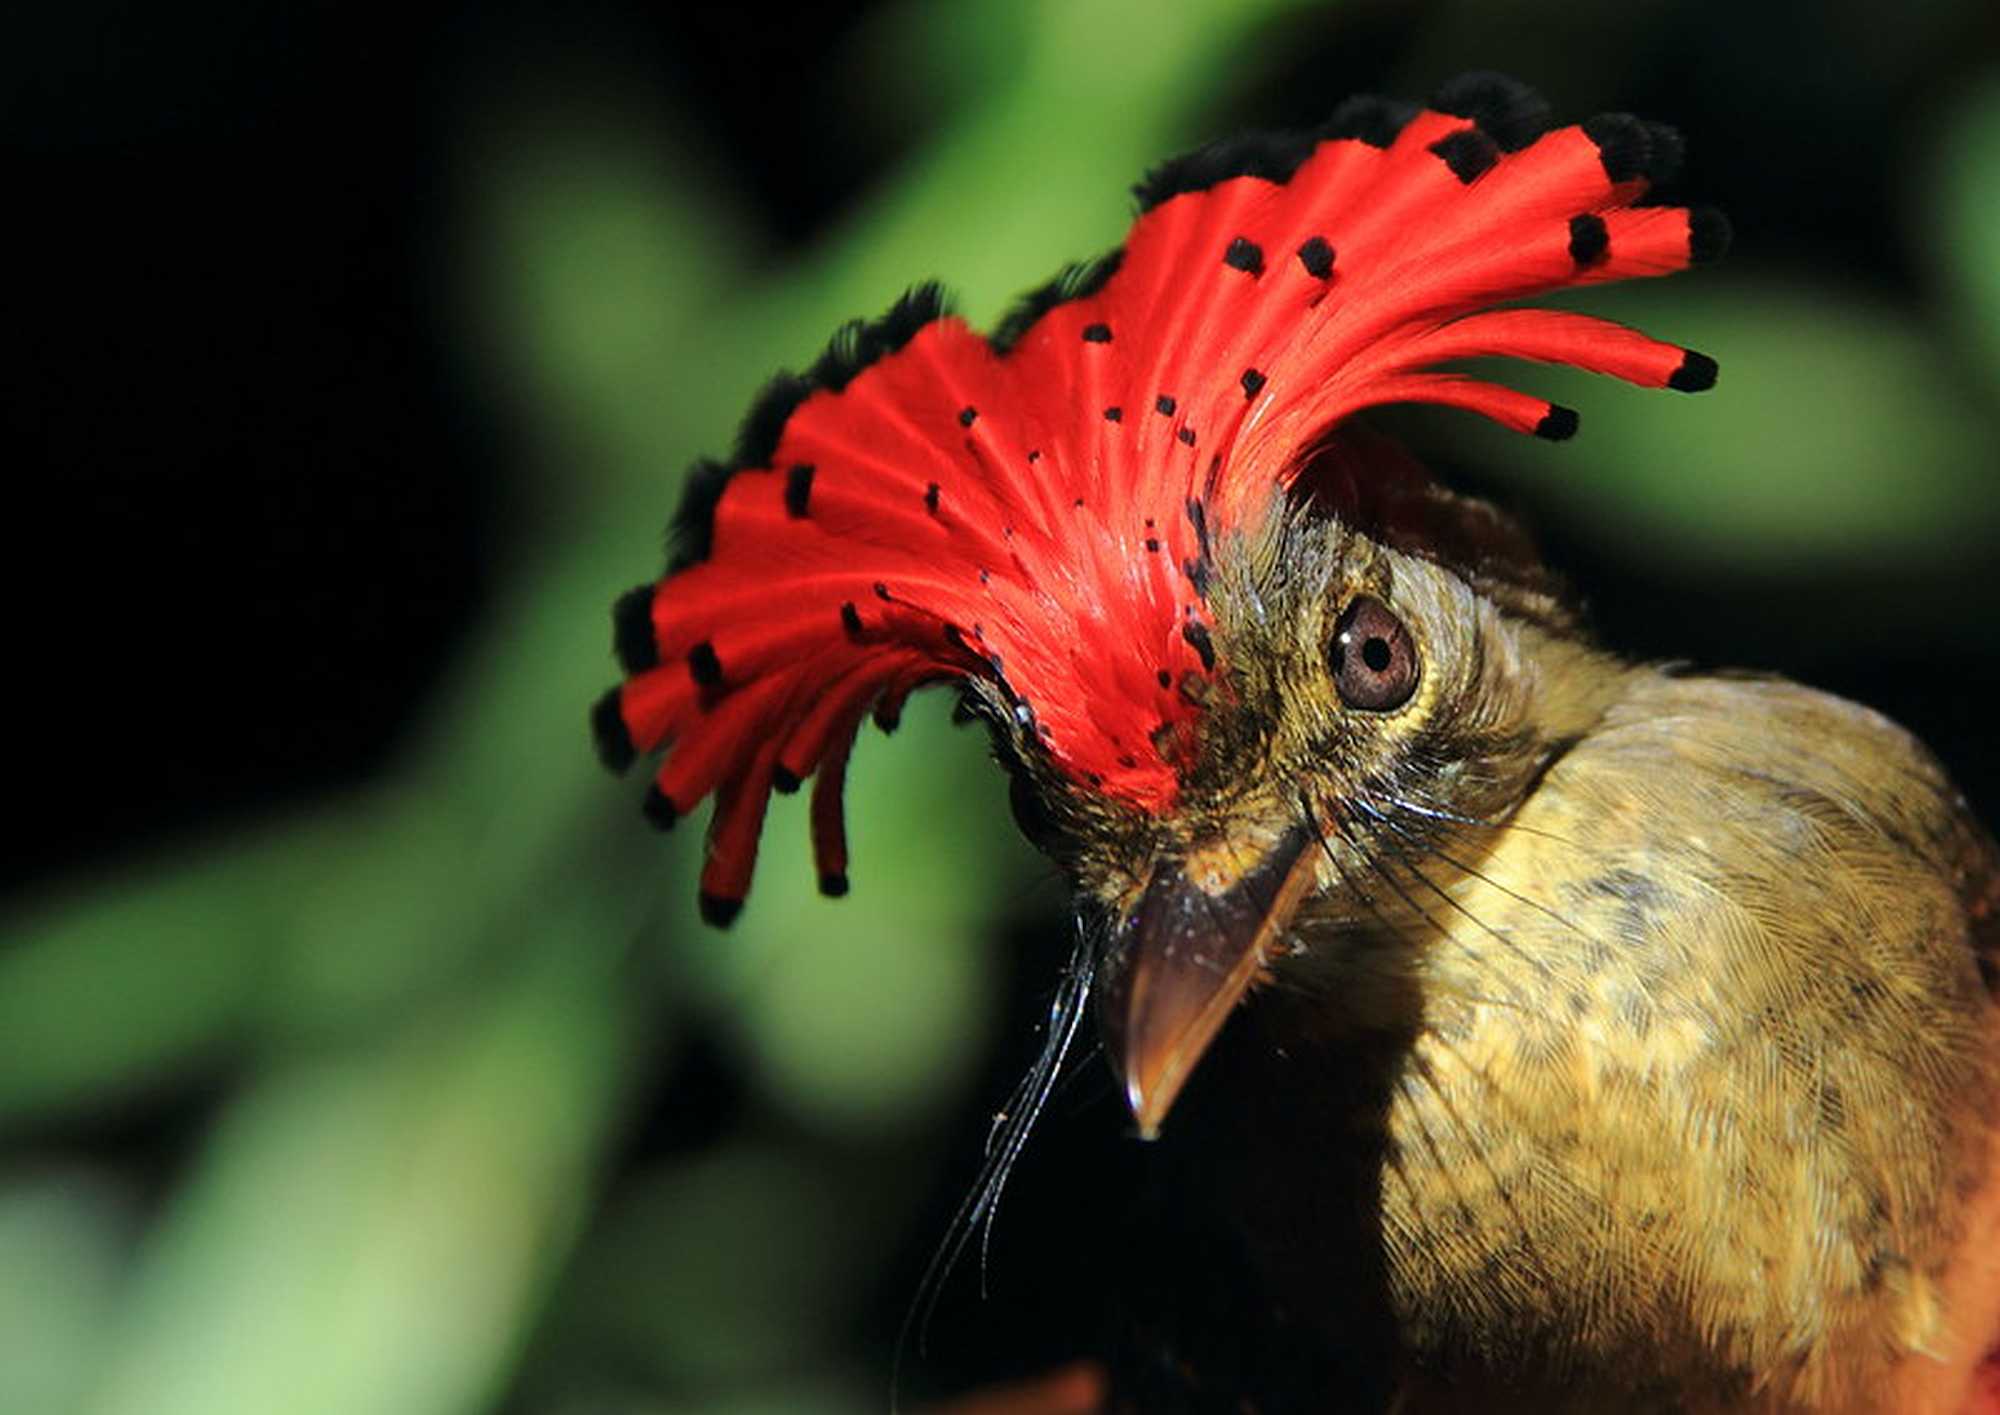 Royal flycatcher (Onychorhynchus coronatus) in the Amazon by Philip Stouffer